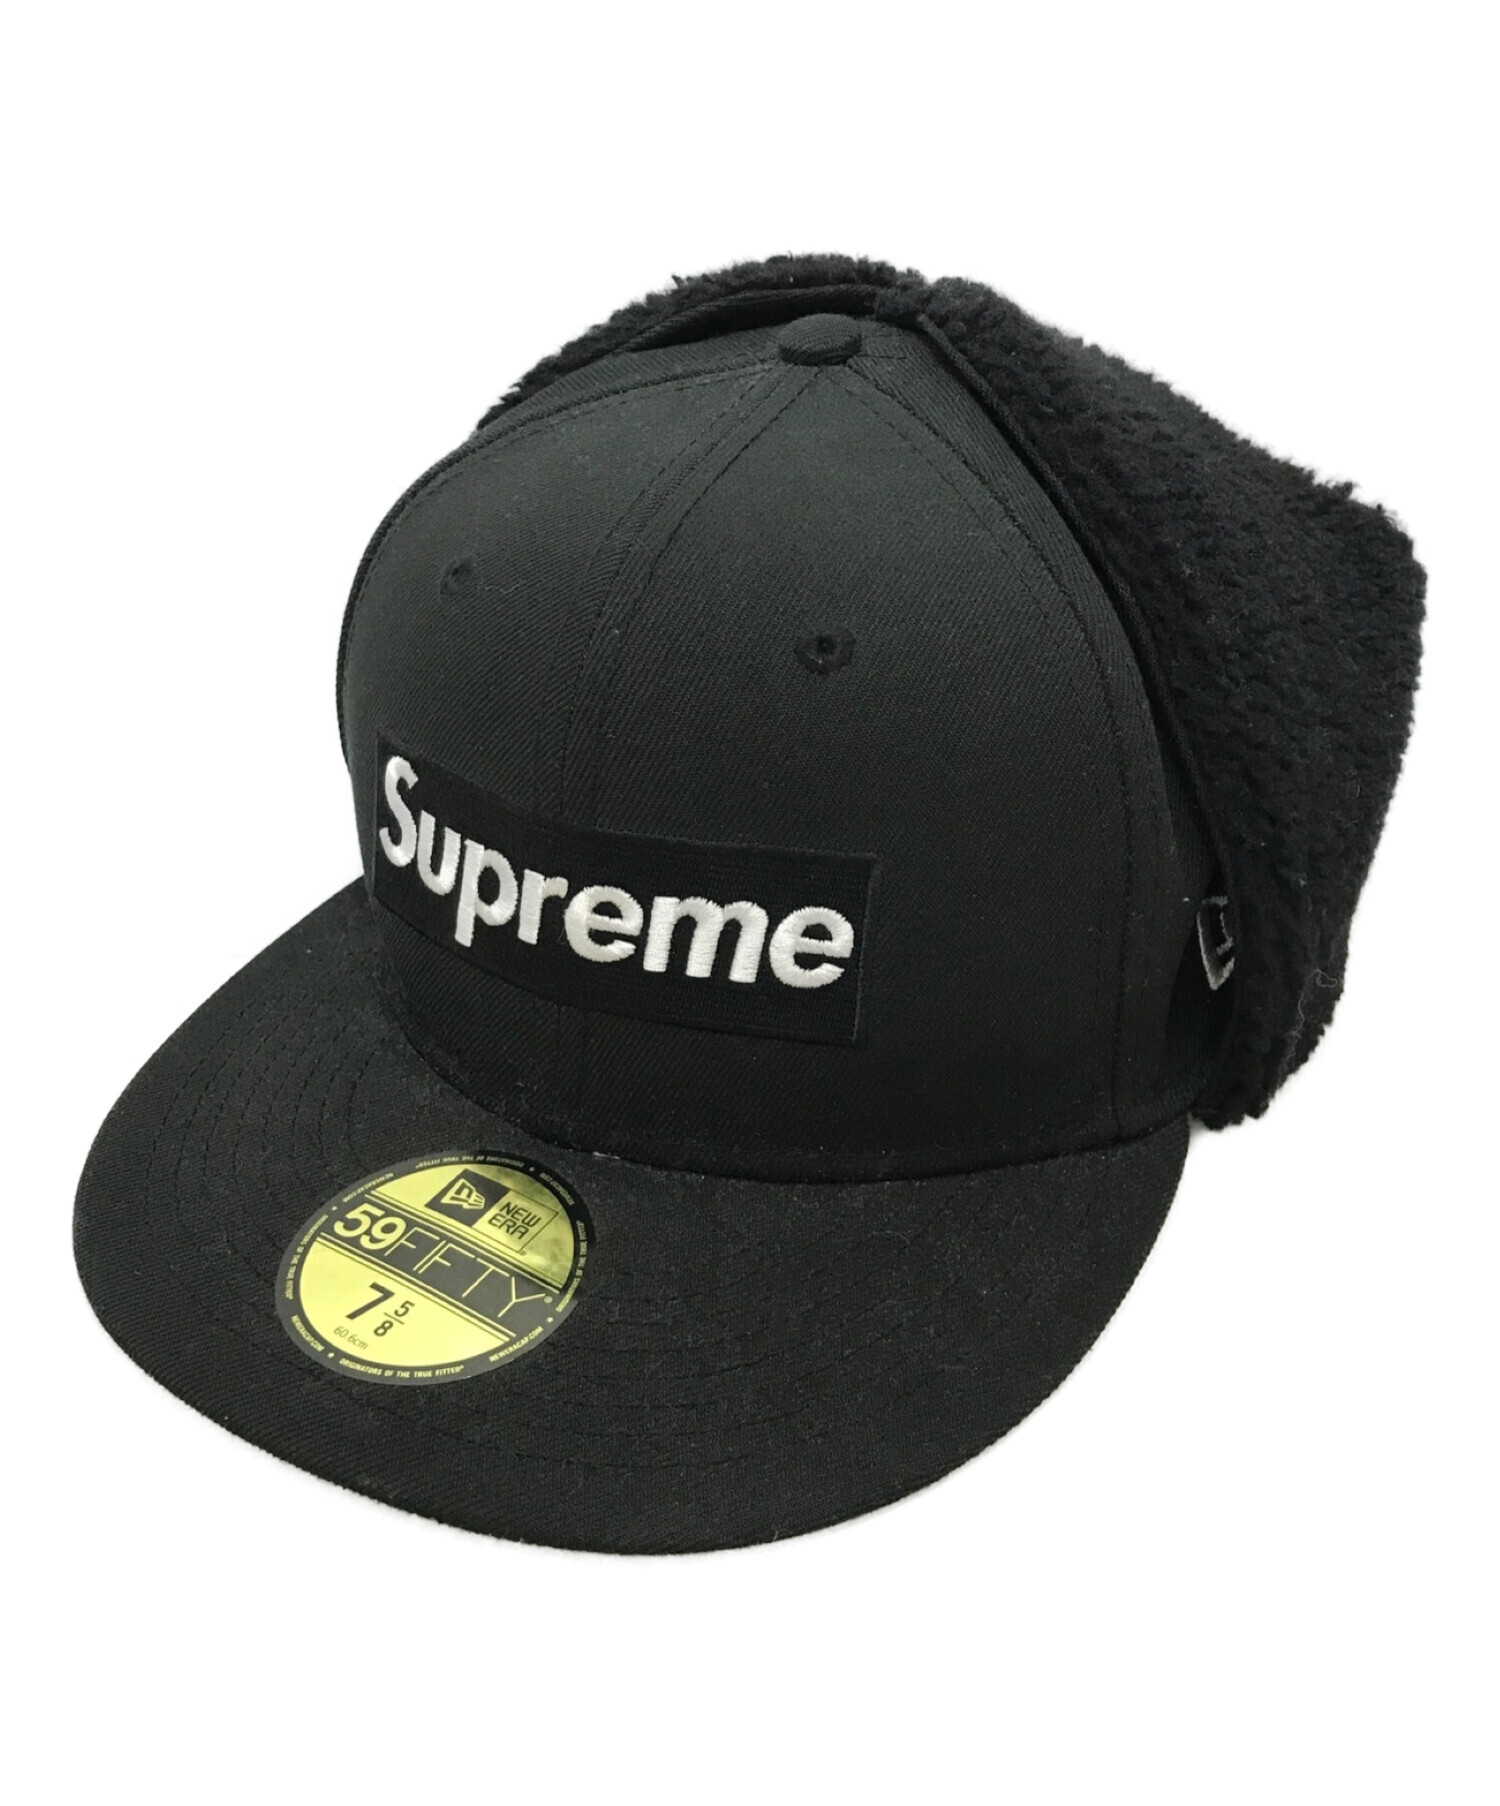 Supreme New Era Cap